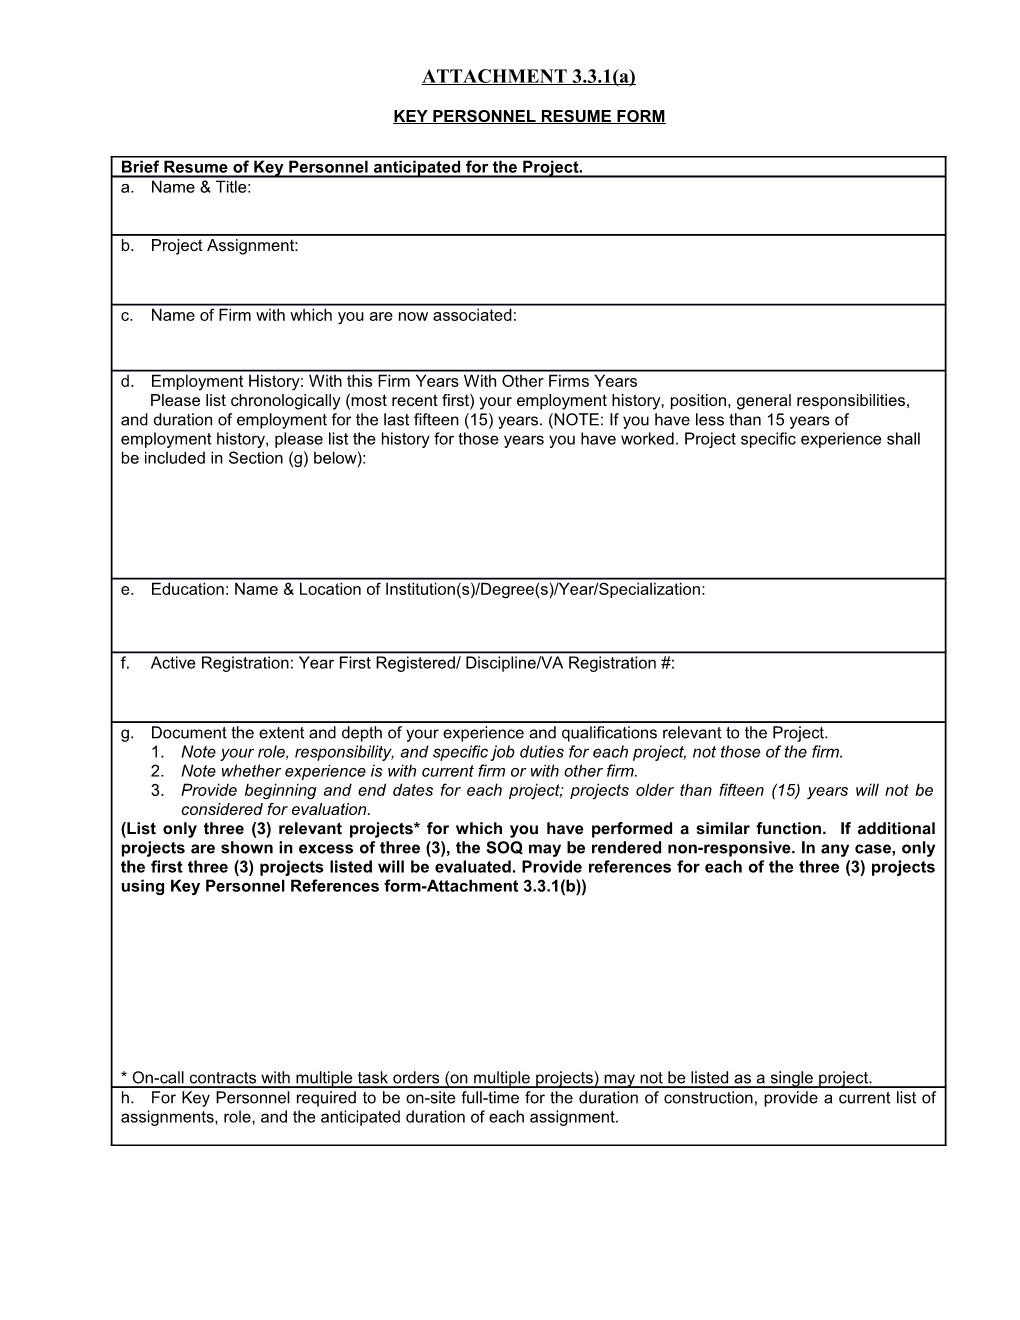 RFQ Resume Form